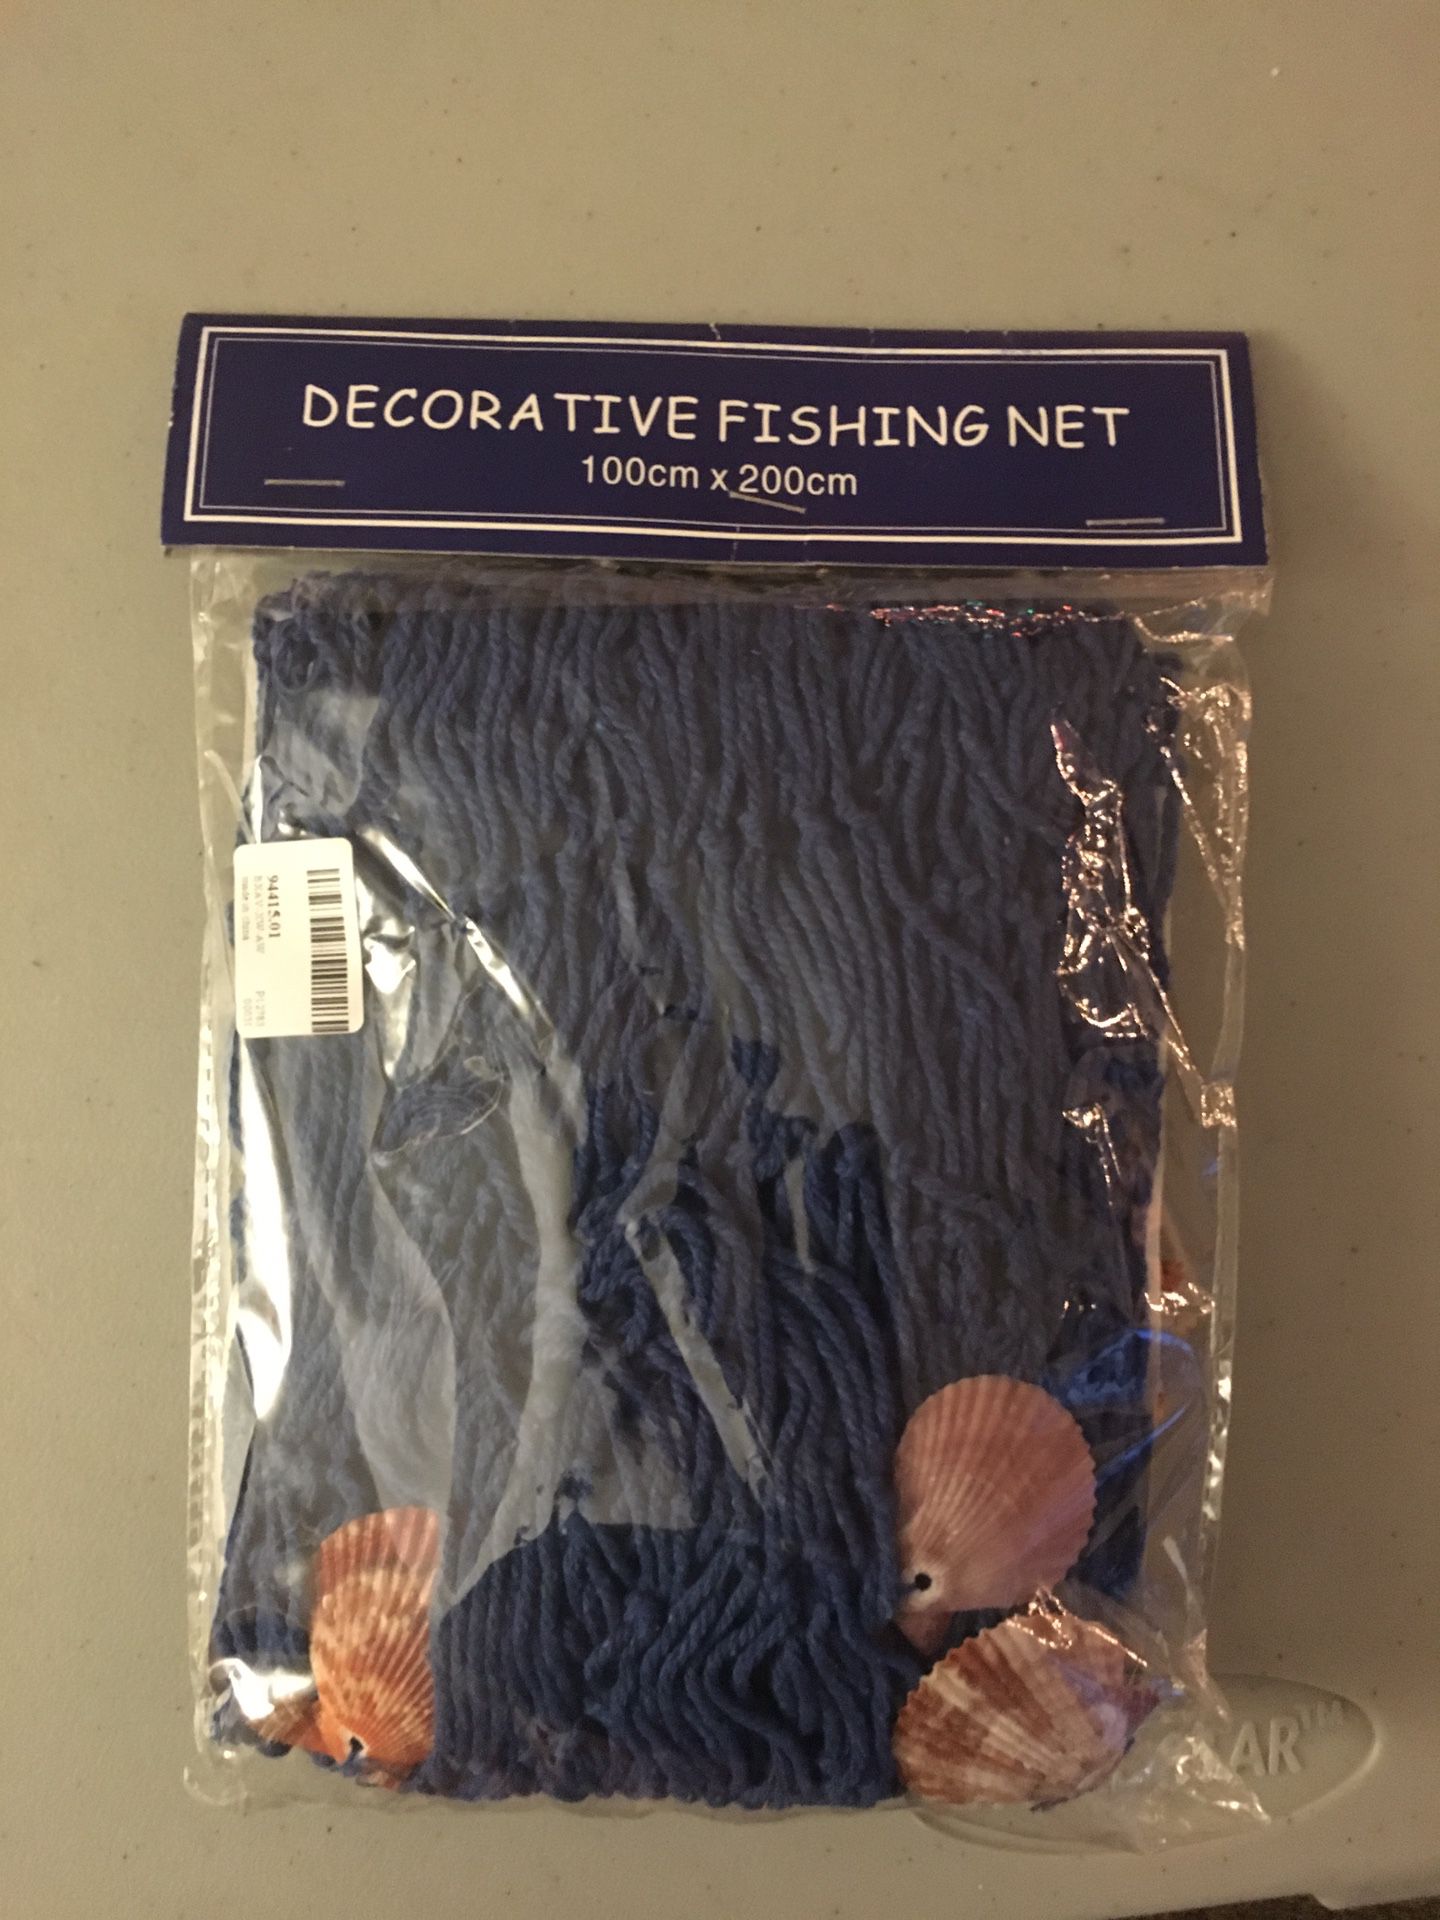 Decorative Fishing Net with Shells